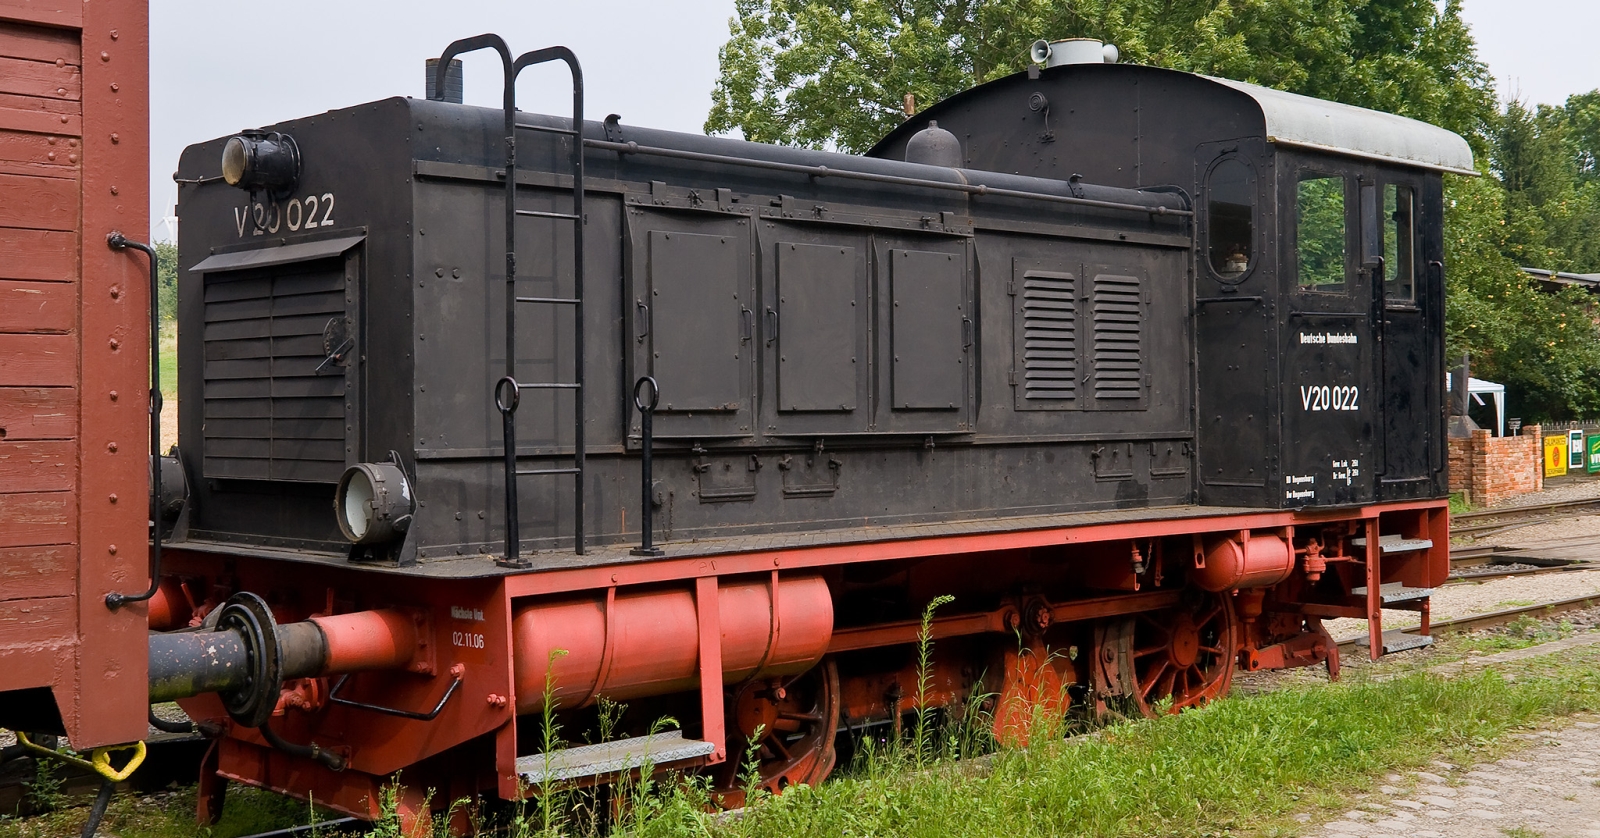 V 20 022 of the Arbeitsgemeinschaft historische Eisenbahn e.V.